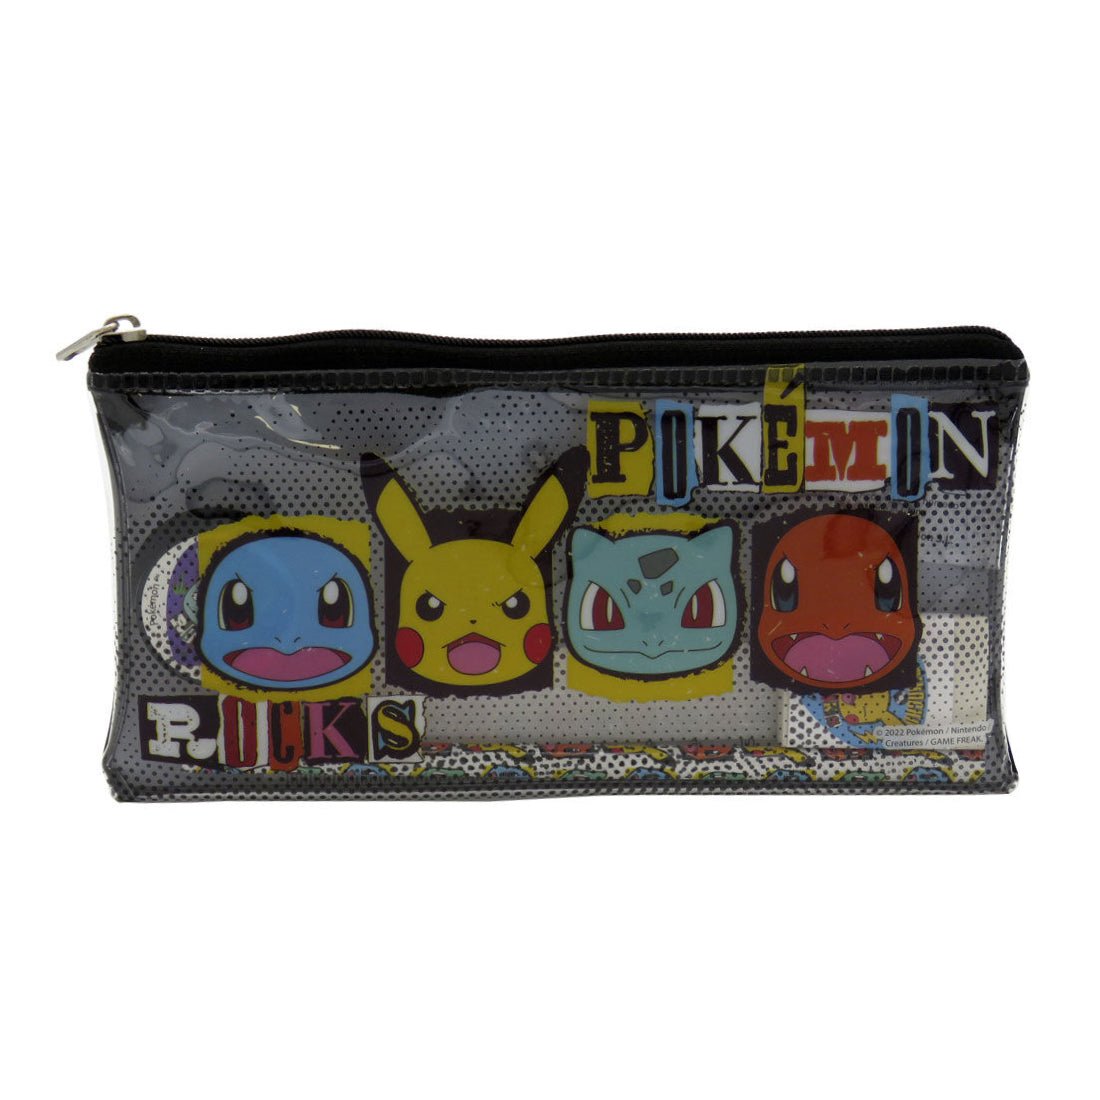 Pokémon Plastic Pencil Case With Stationeries - أدوات مدرسية - Store 974 | ستور ٩٧٤